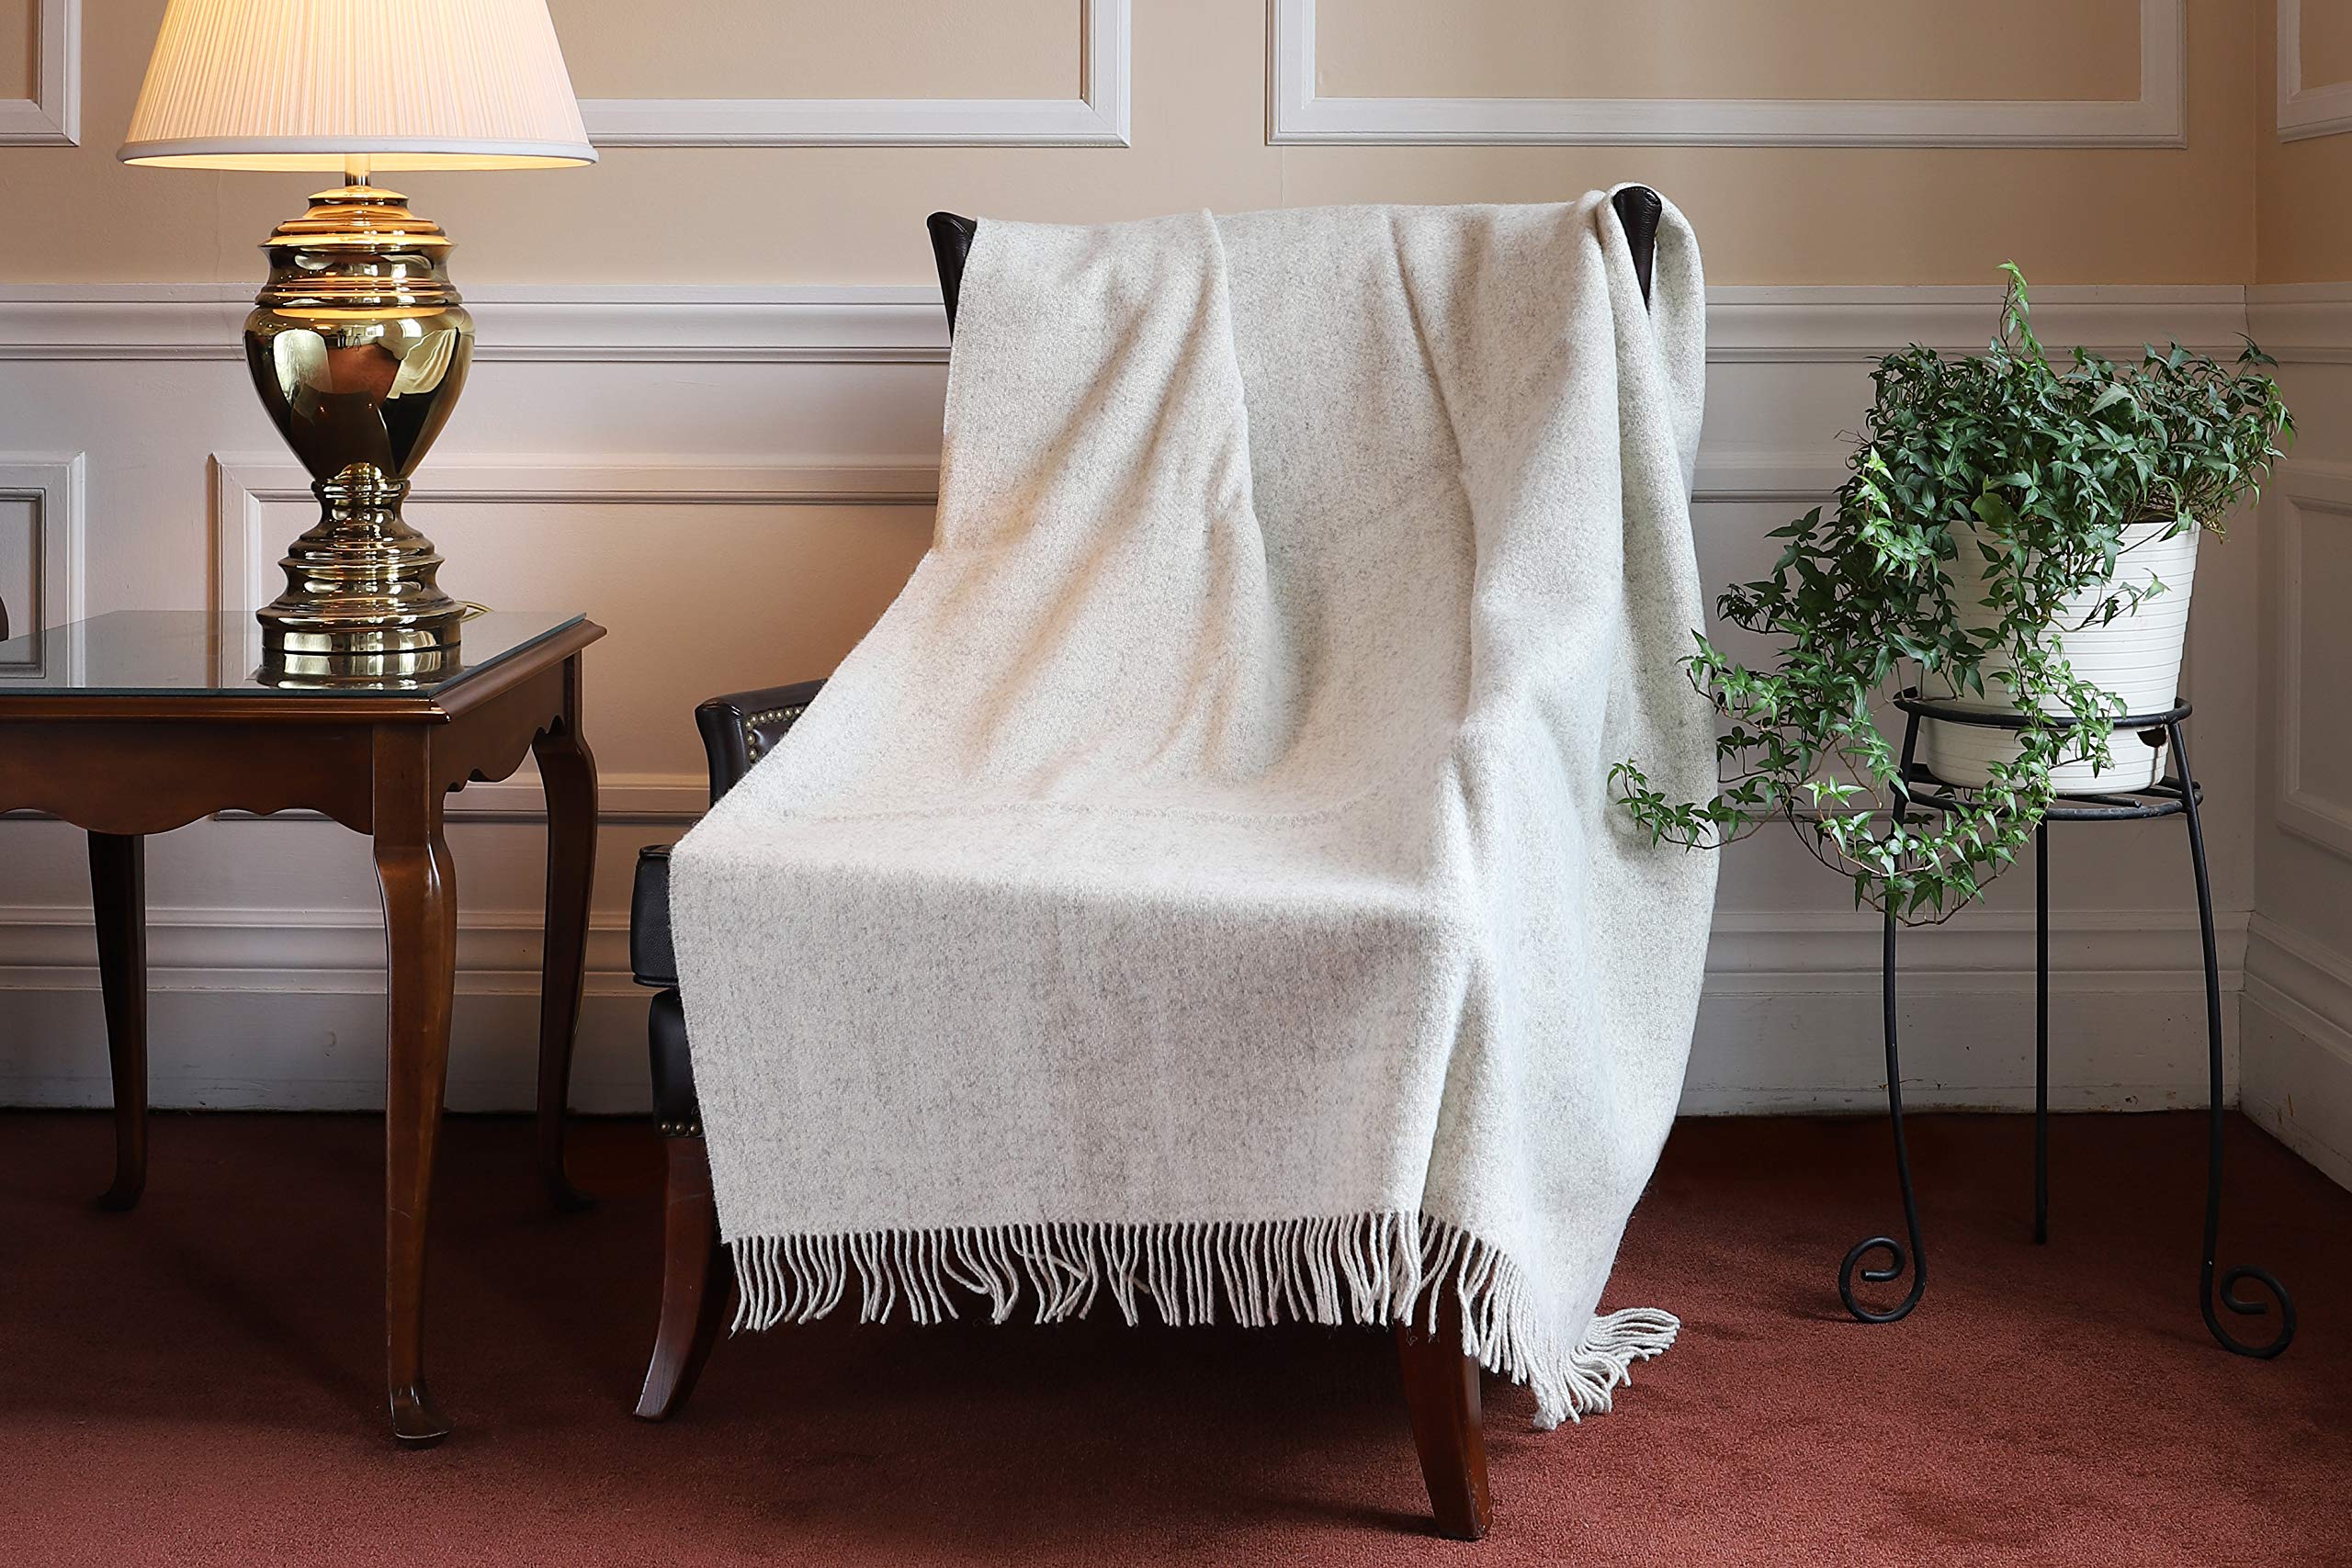 Natural Afghan Linen and Lambs' Wool Blanket – Irish Linen Properties